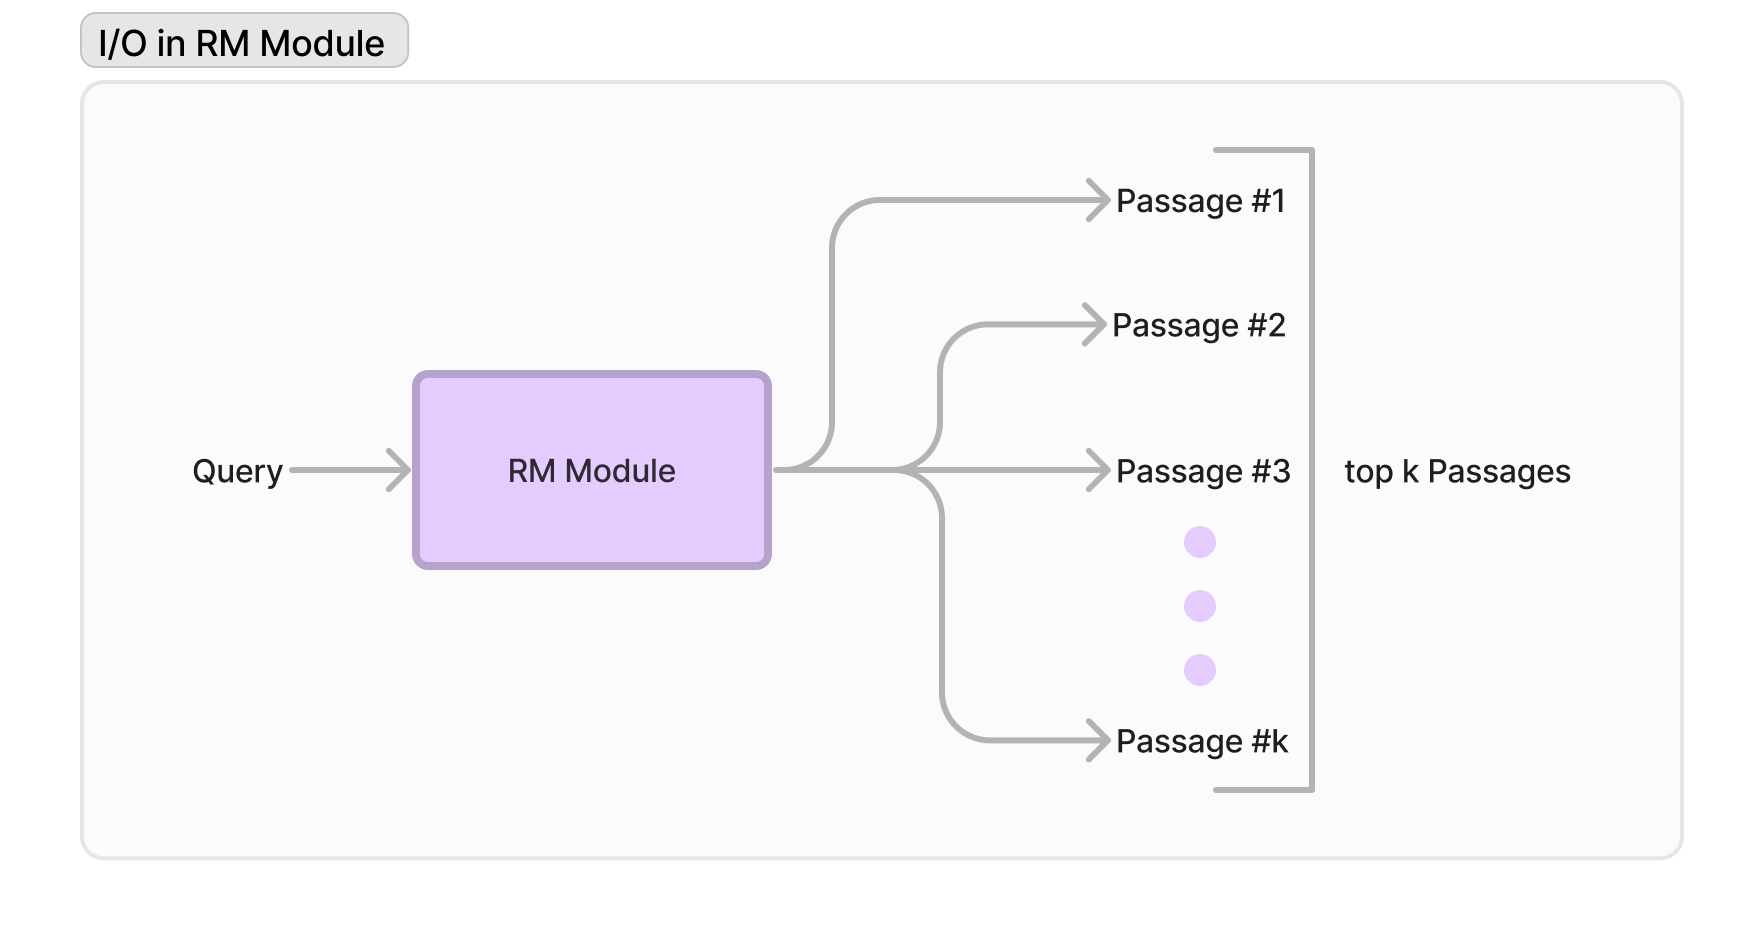 I/O in RM Module